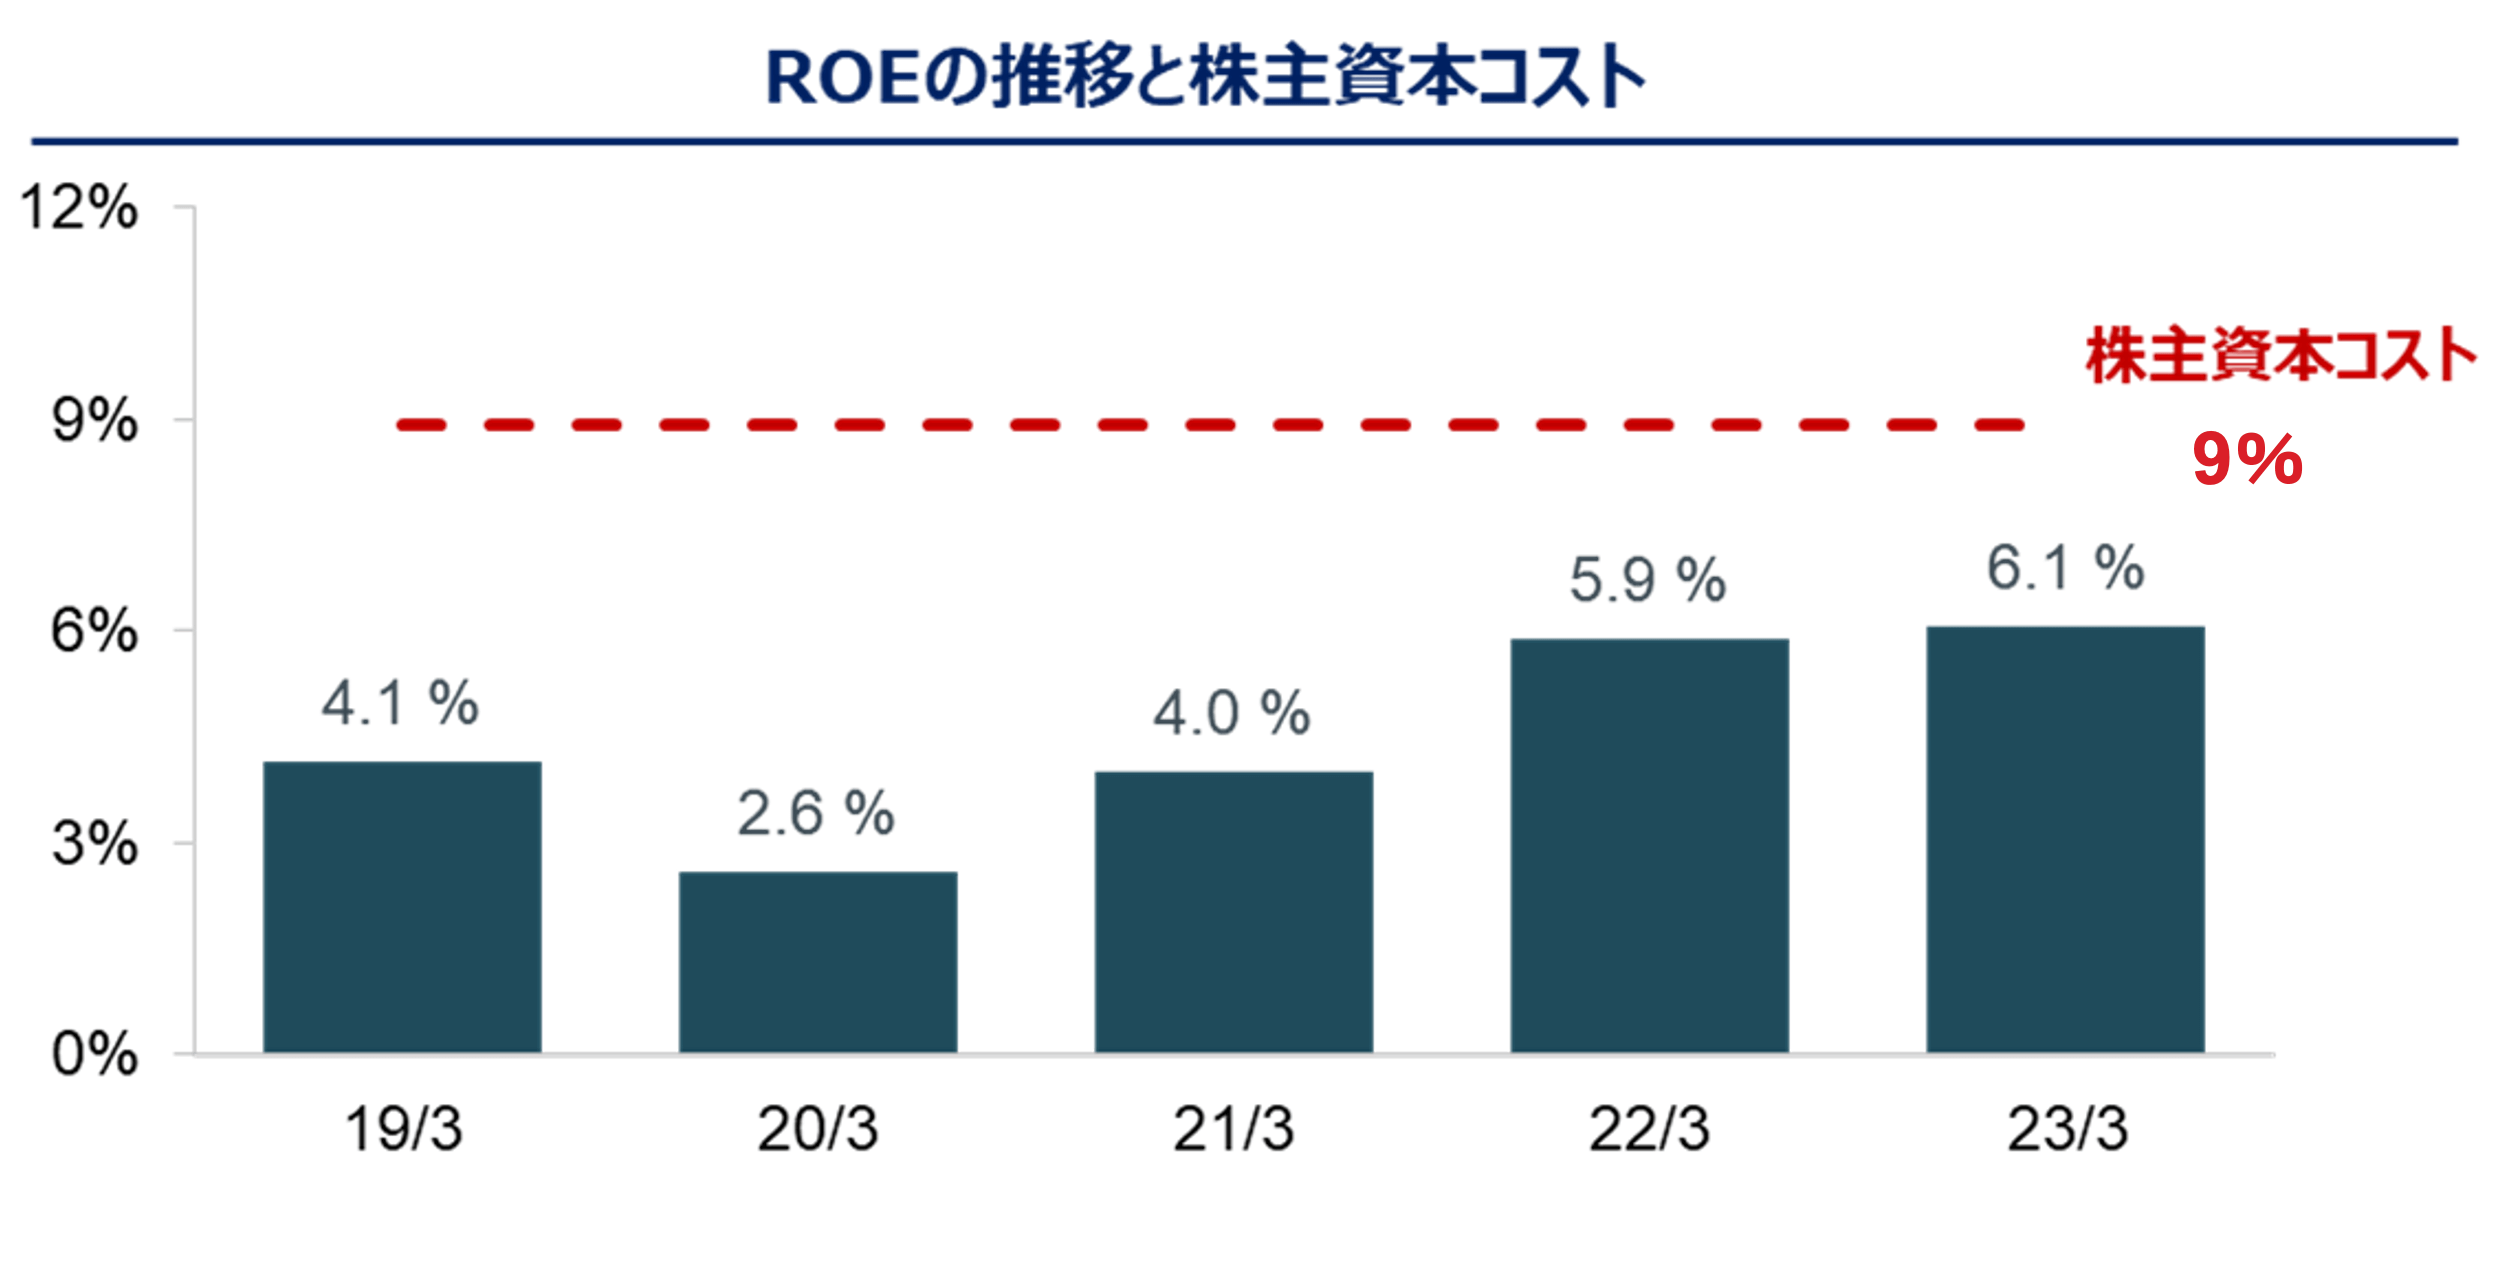 ROEの推移と株主資本コスト